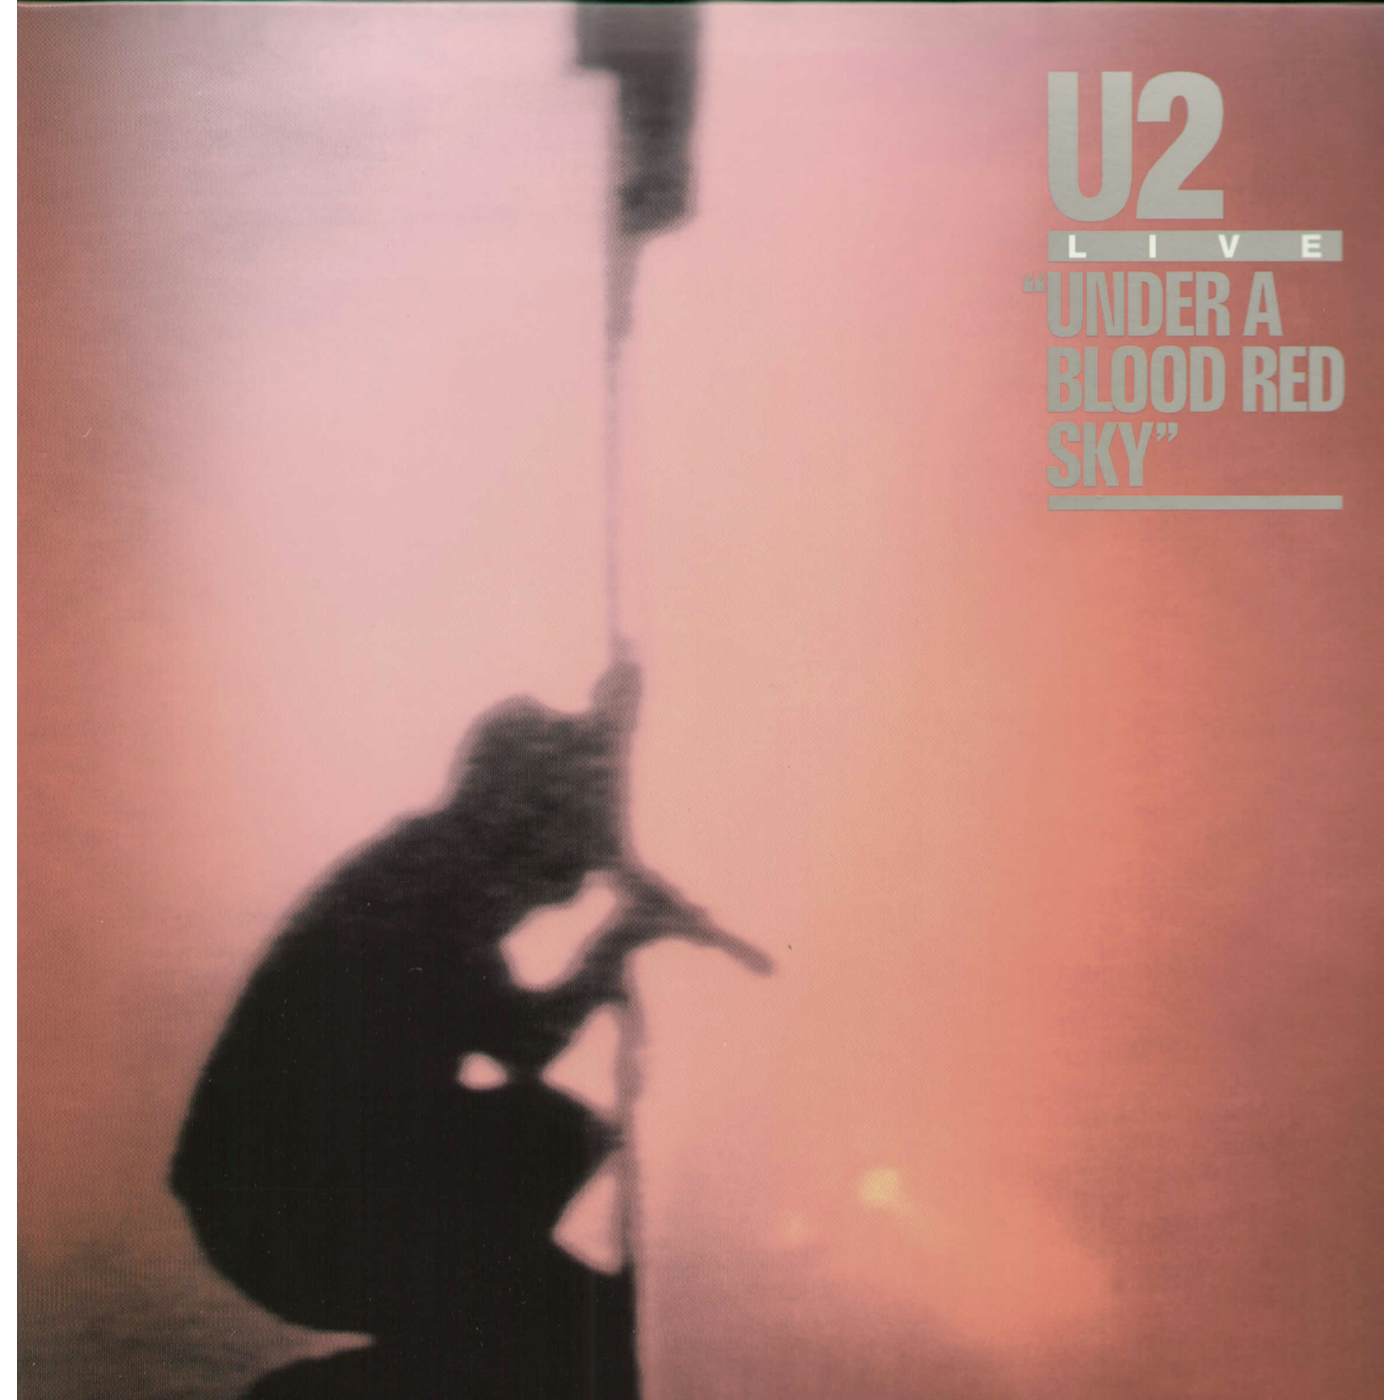 U2 UNDER BLOOD RED SKY Vinyl Record